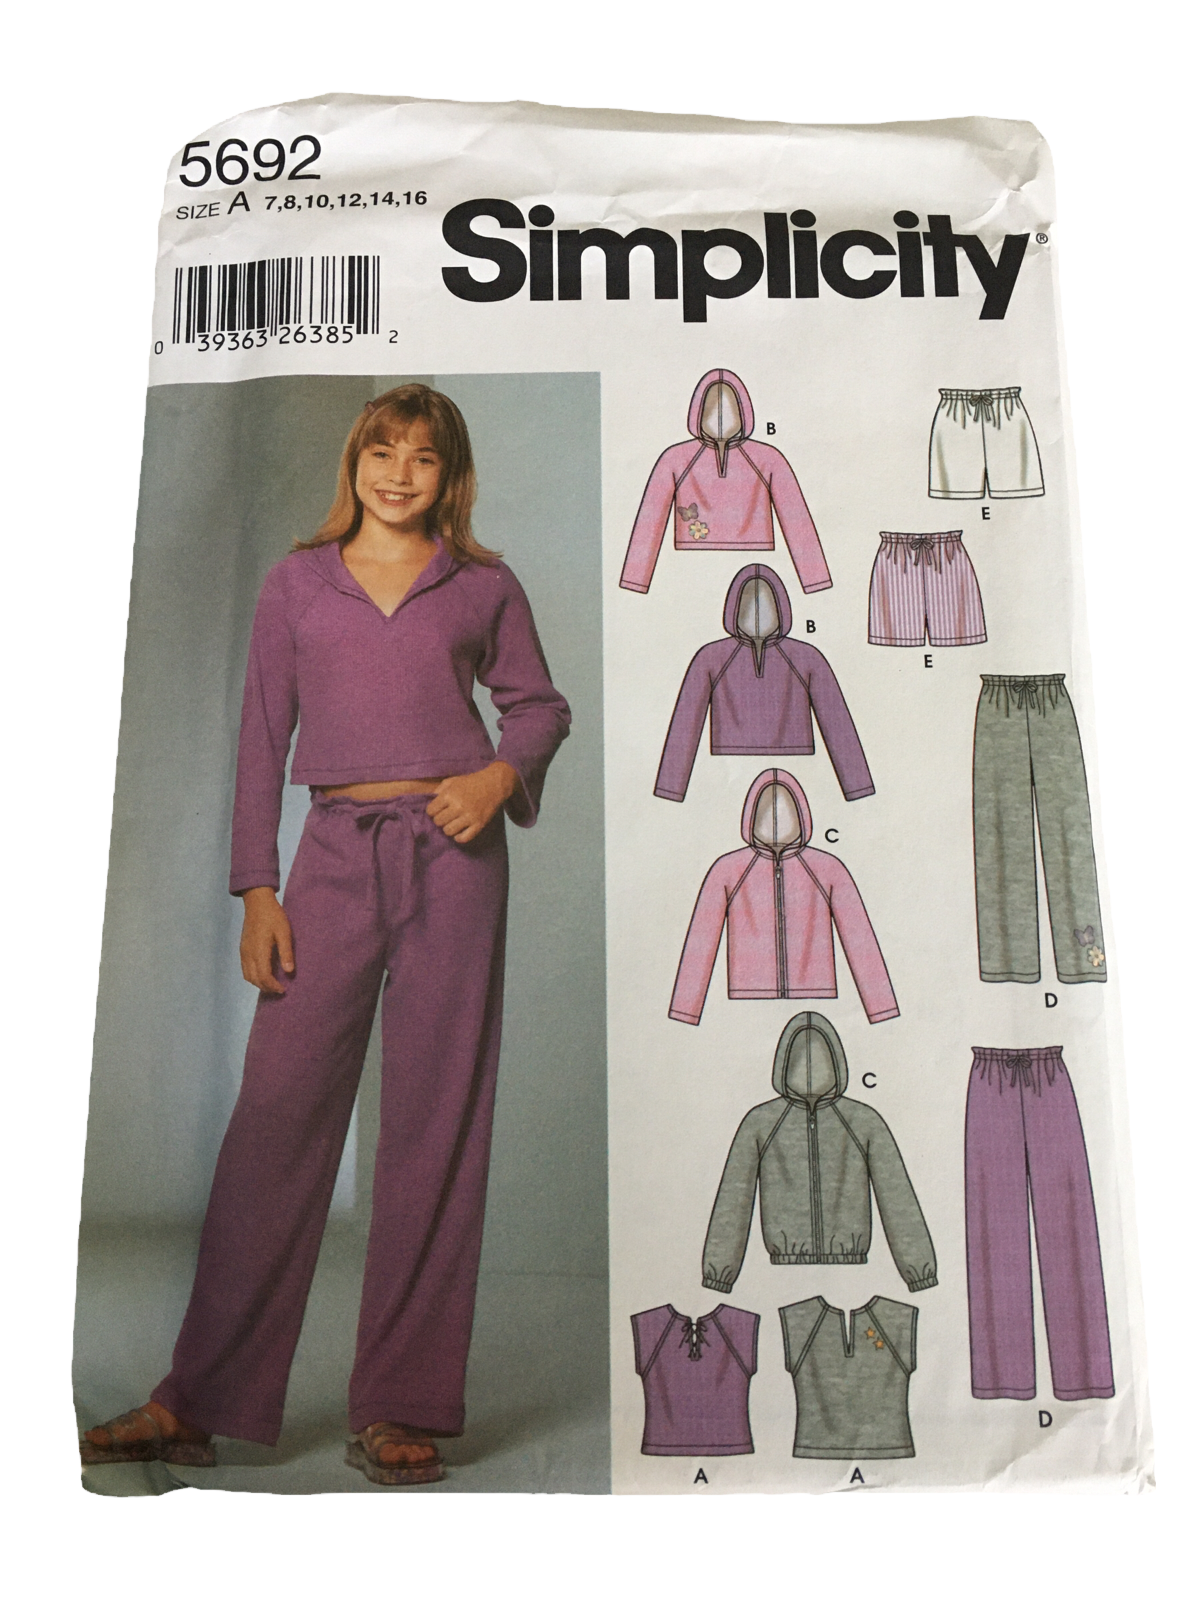 Simplicity Sewing Pattern 5692 Girls Pants Shorts Knit Tops Jacket 7-16 Uncut - $3.99